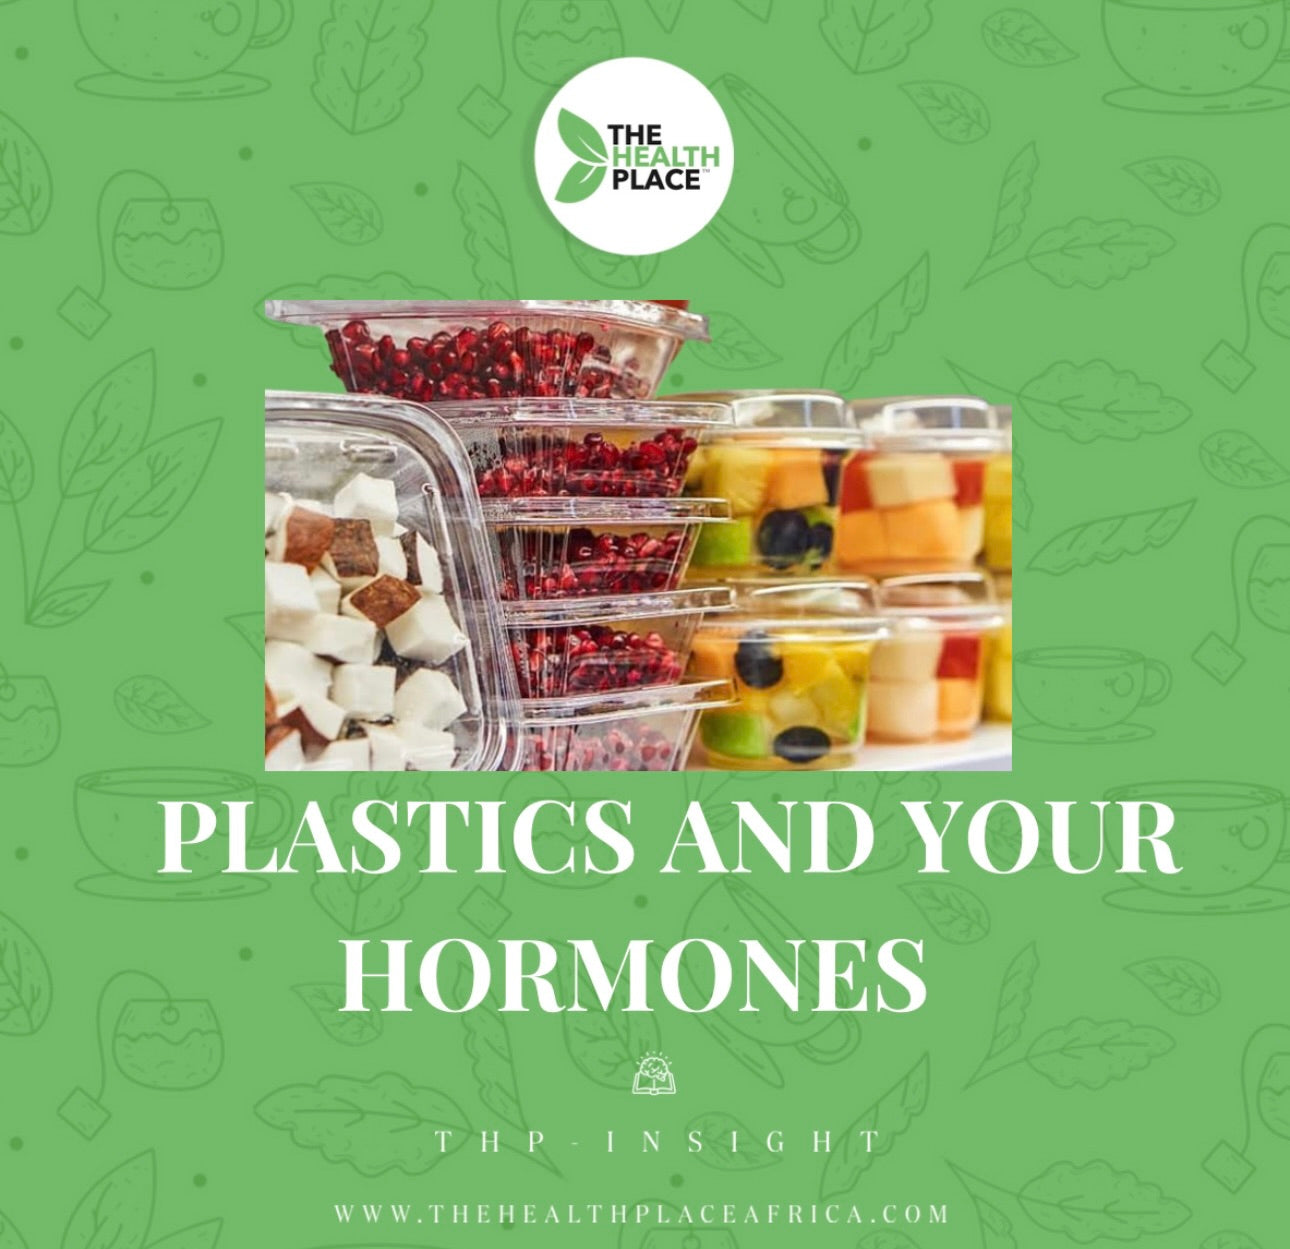 PLASTICS AND YOUR HORMONES